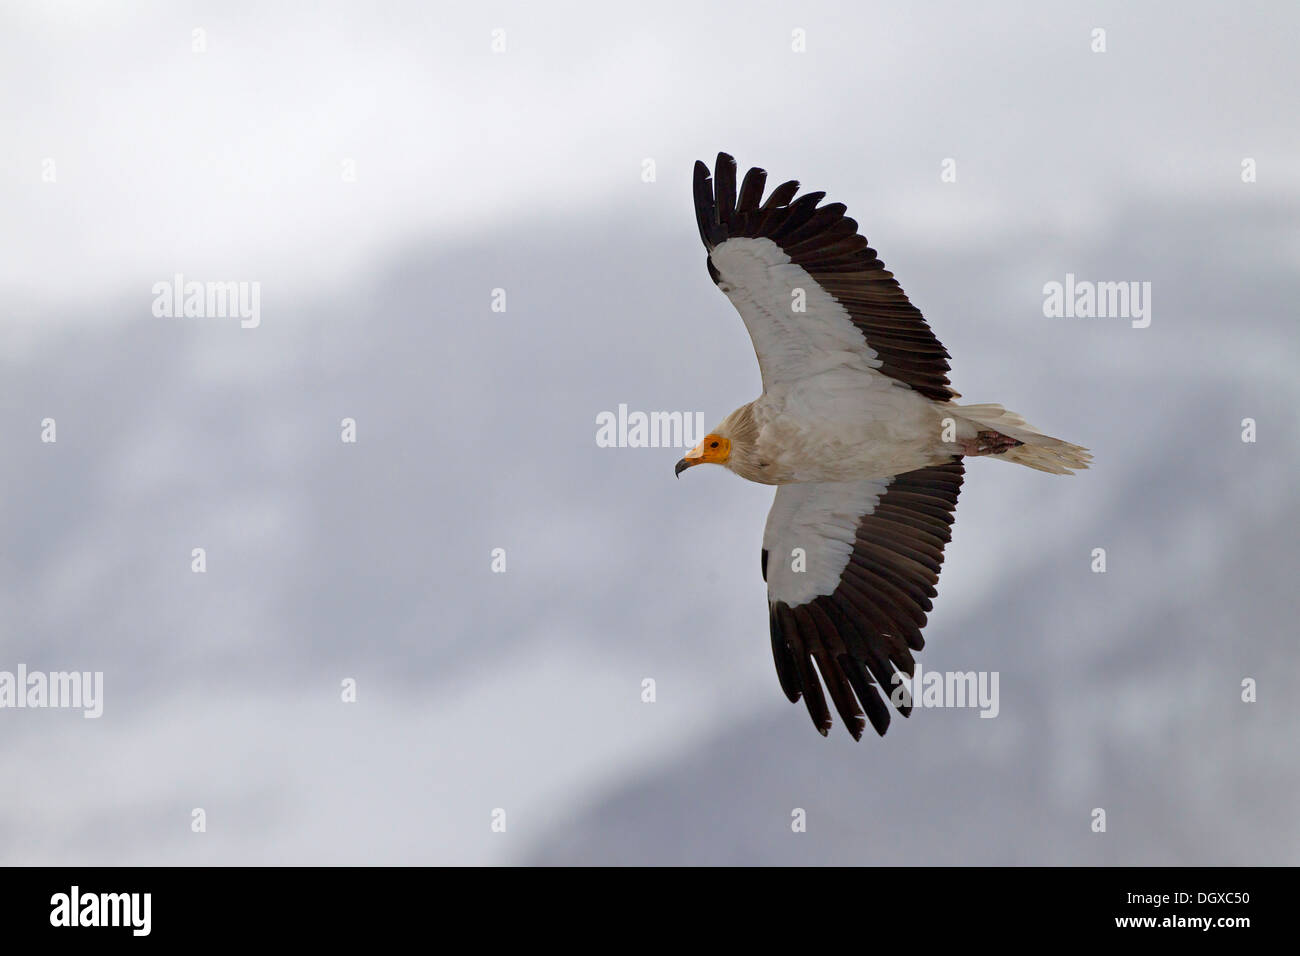 egyptian-vulture-neophron-percnopterus-in-flight-pyrenees-aragon-spain-DGXC50.jpg